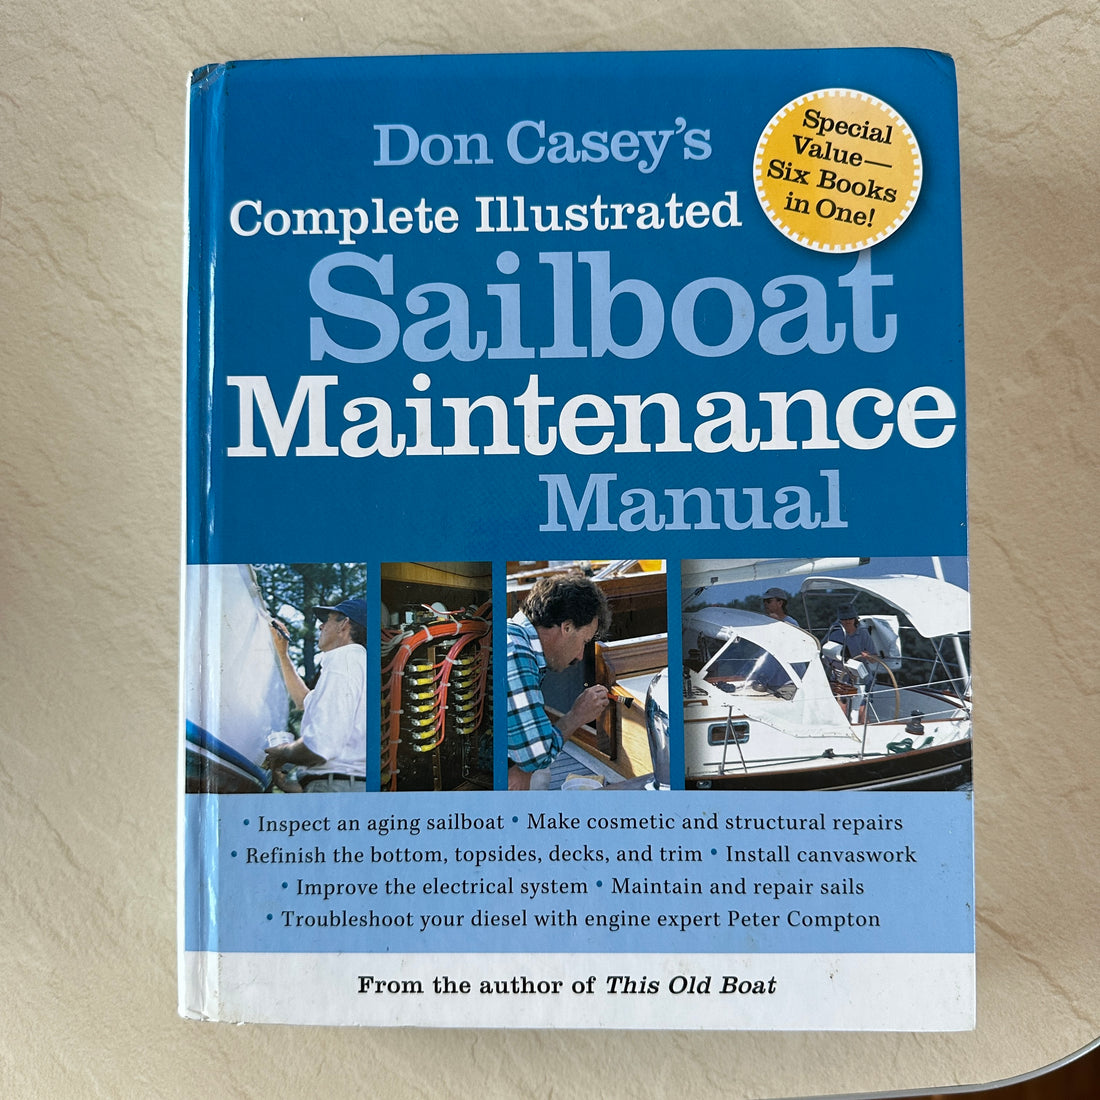 *SailBoat Maintenance Manual (Don Casey's)